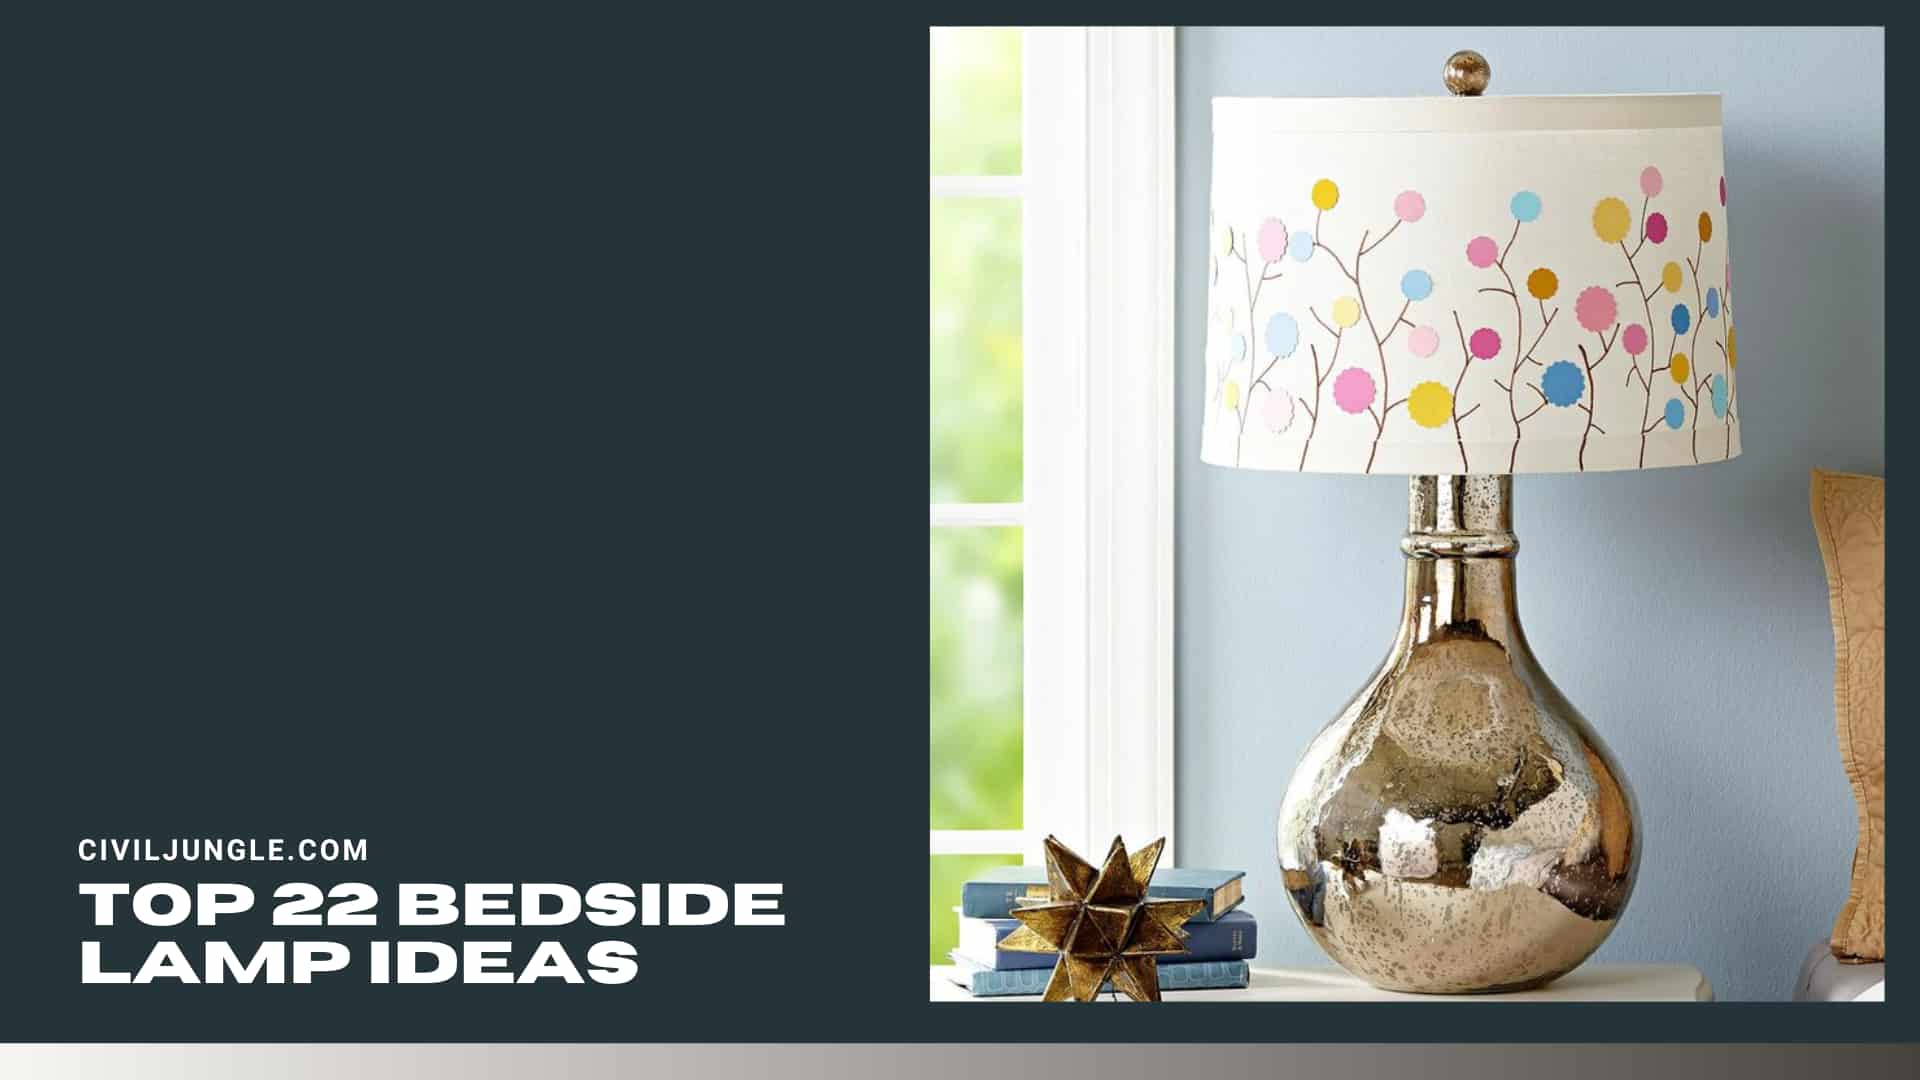 Top 22 Bedside Lamp Ideas